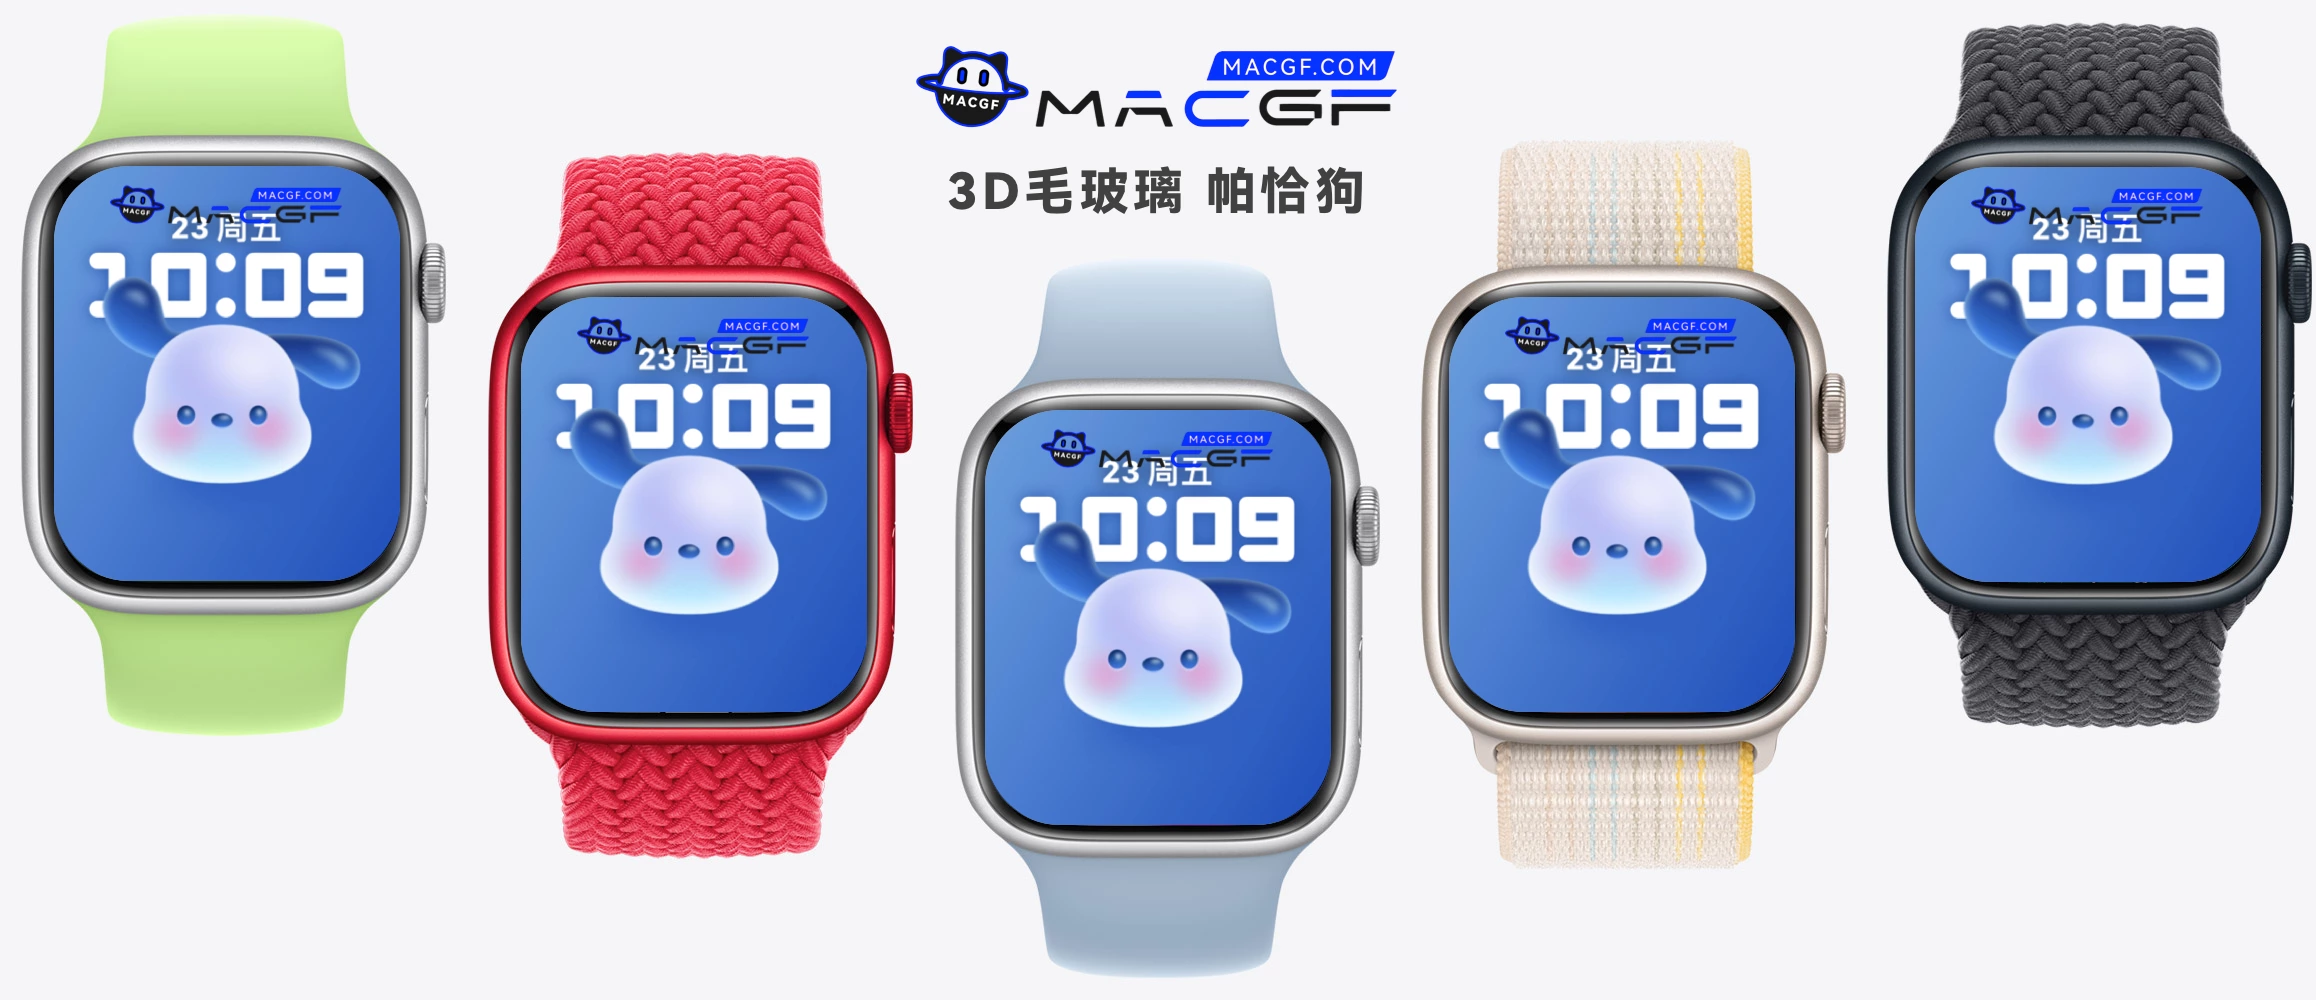 3D毛玻璃 帕恰狗 Apple watch 精美原生表盘 - macGF